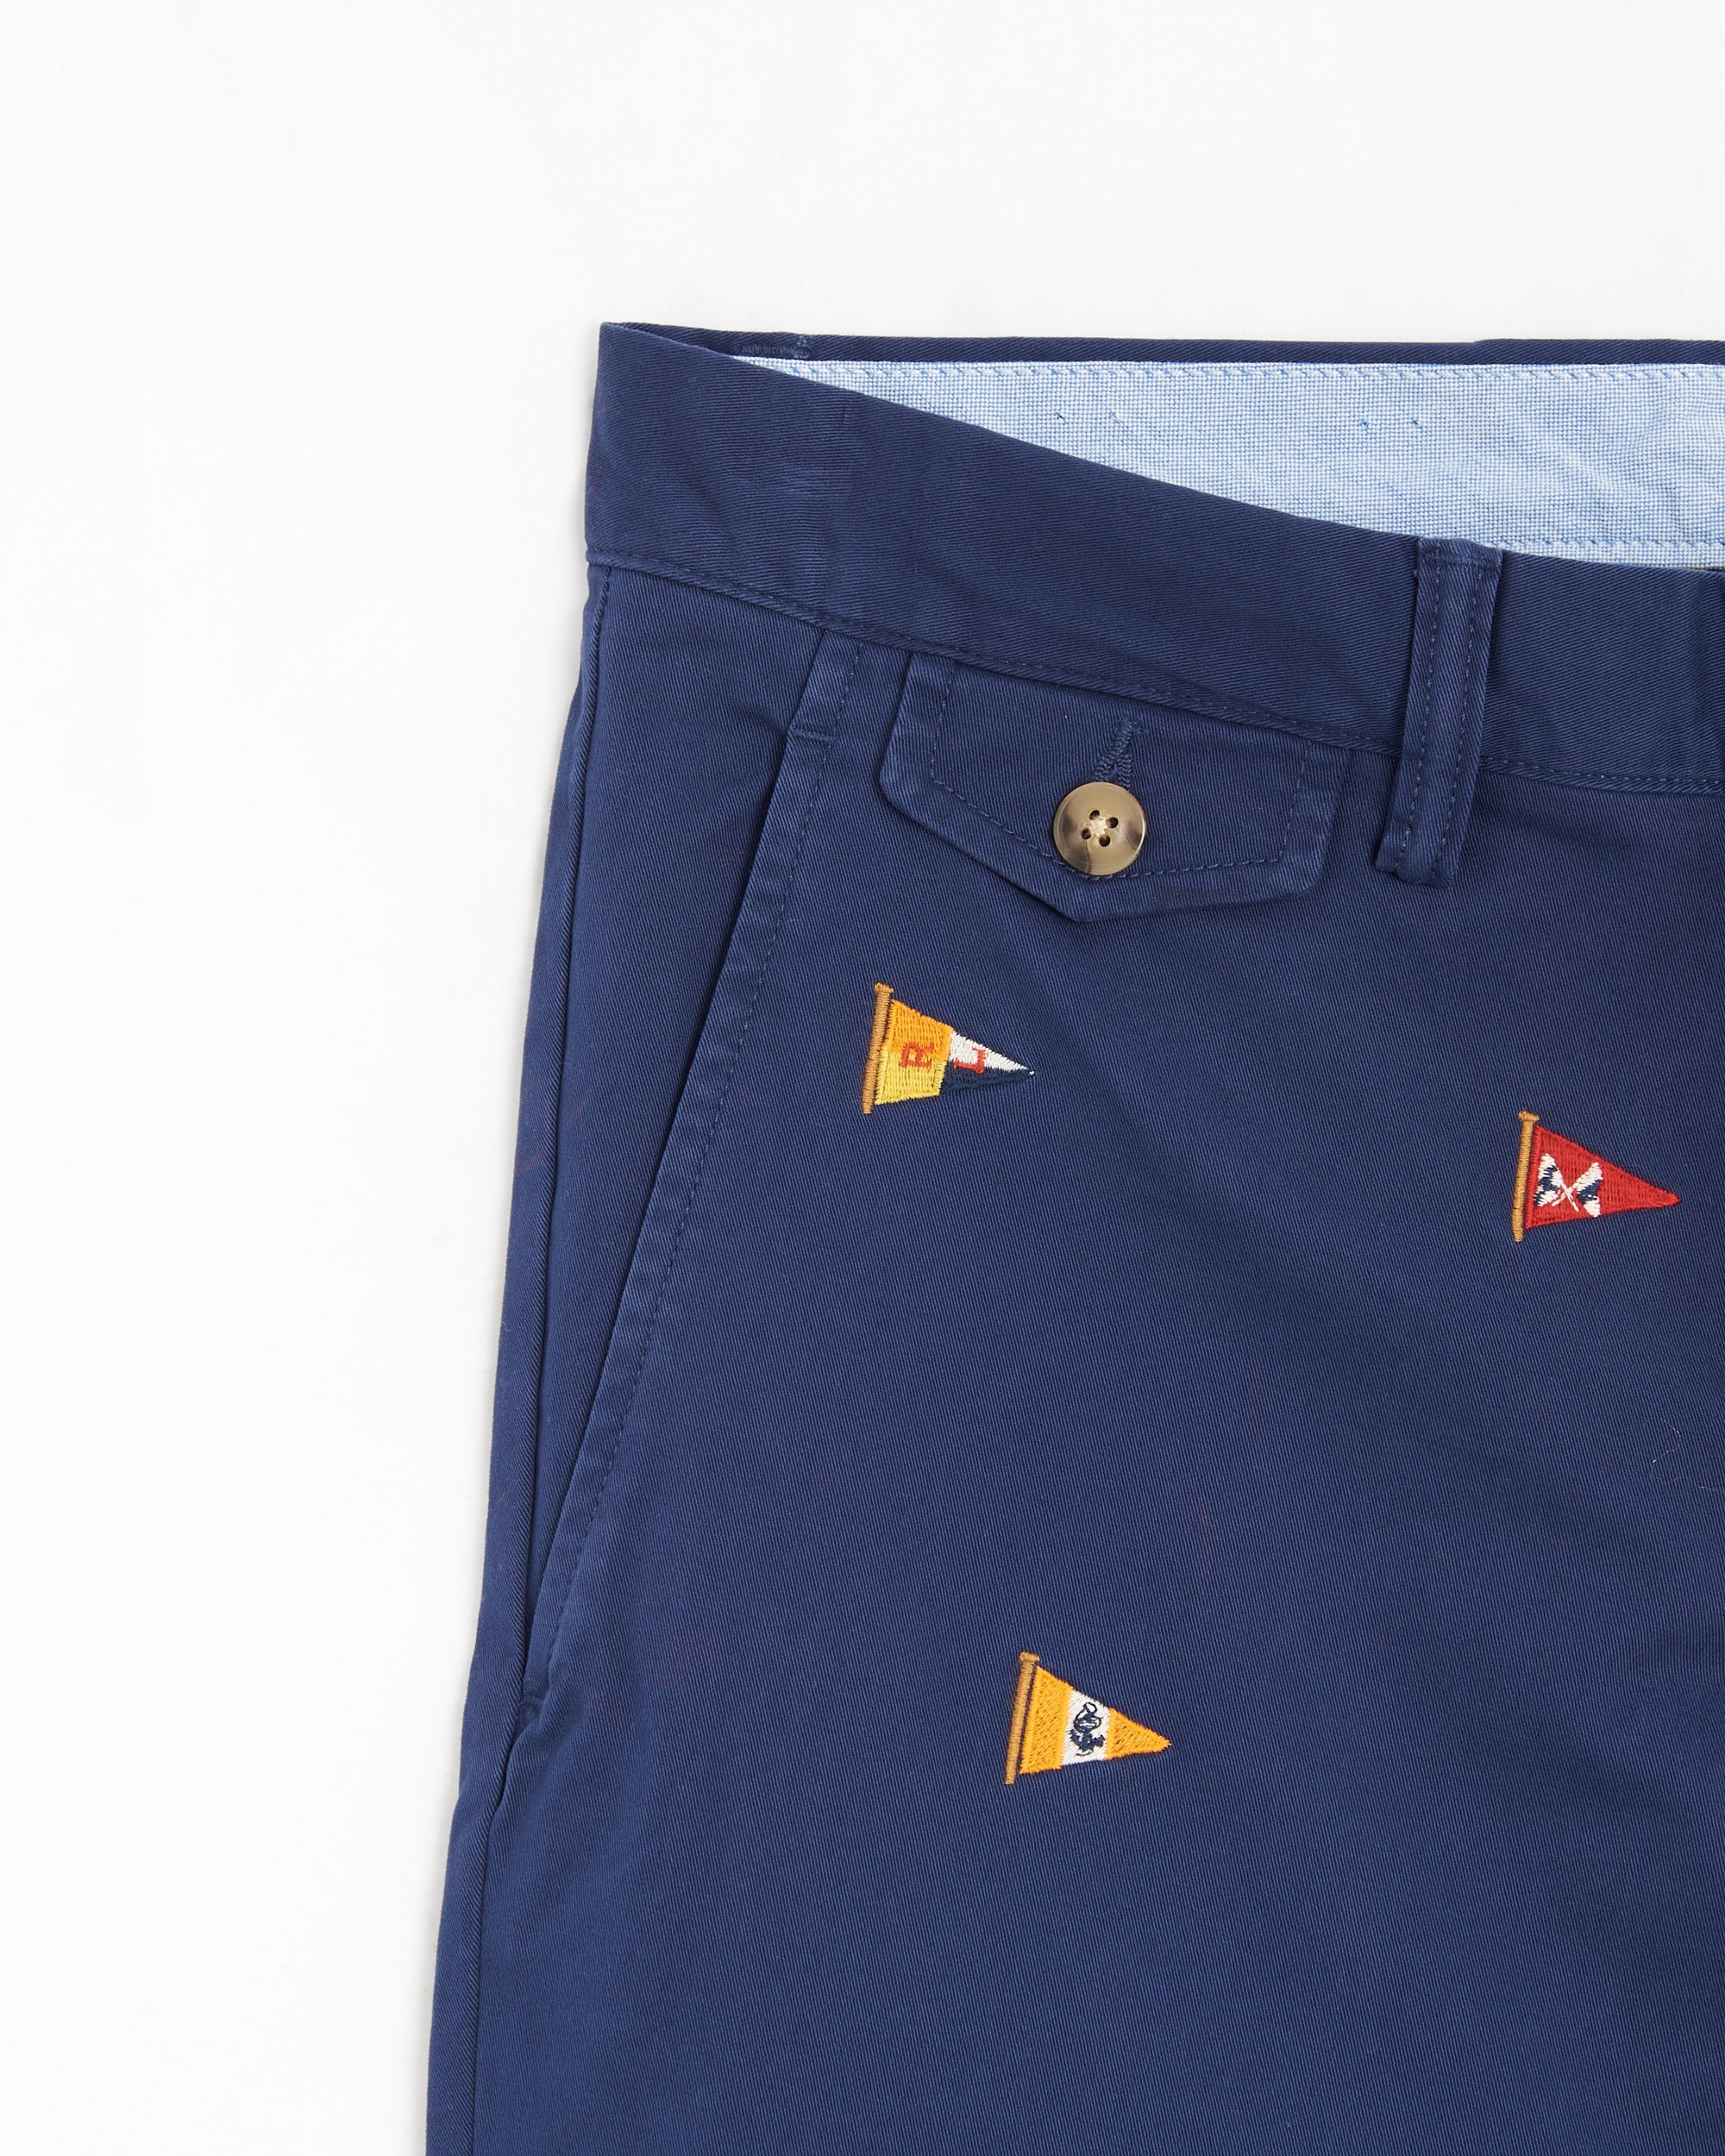 POLO RALPH LAUREN - Men's sporty trousers with logo - Blue - 710888283002